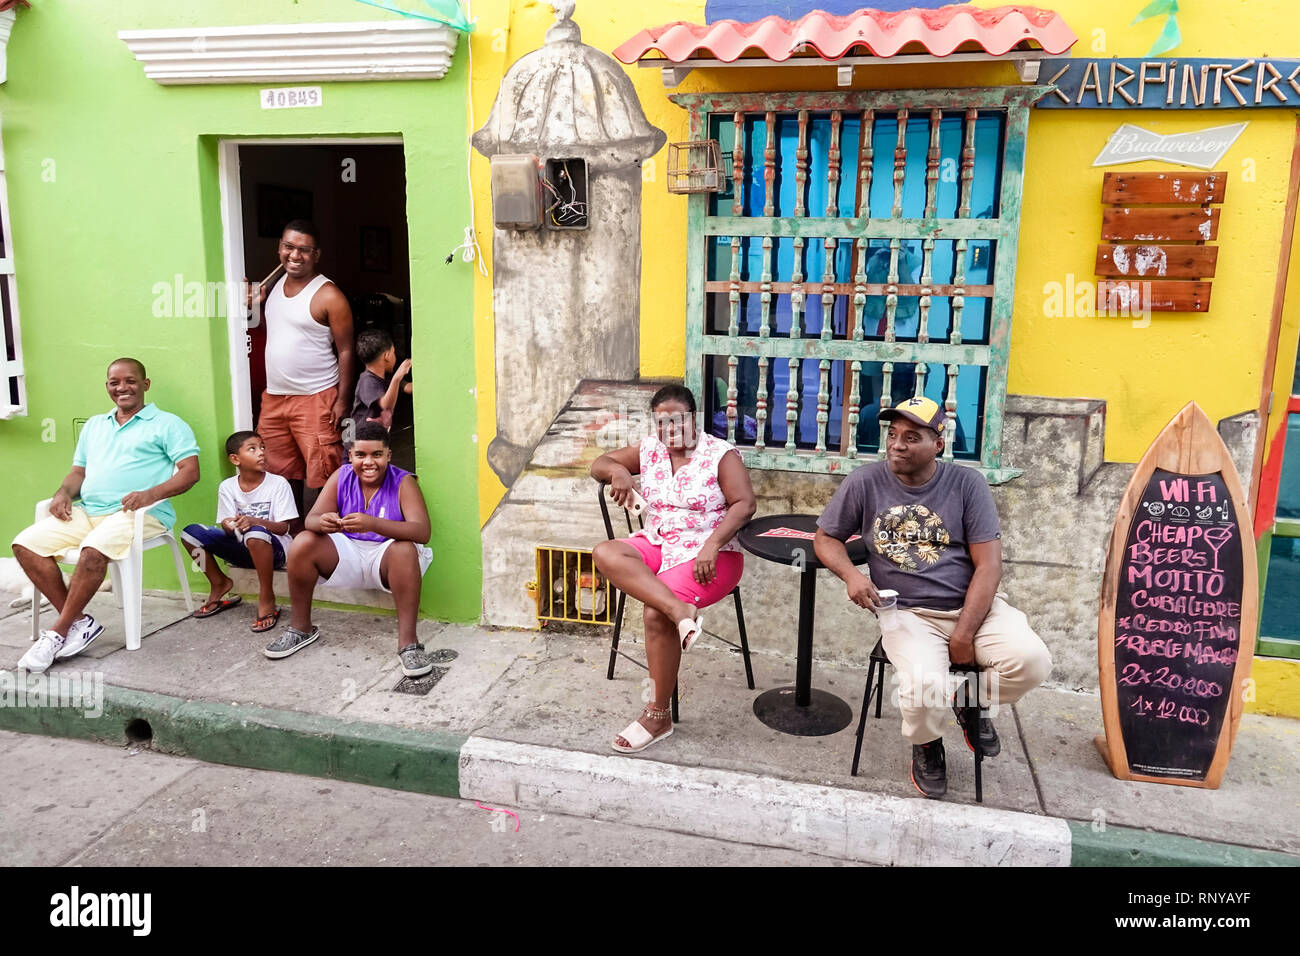 Cartagena Colombia,Center,centre,Getsemani,neighborhood,doorway,Karpinteros bar,wall mural,exterior,Black,Afro Caribbean,Hispanic Latinos,immigrant im Stock Photo